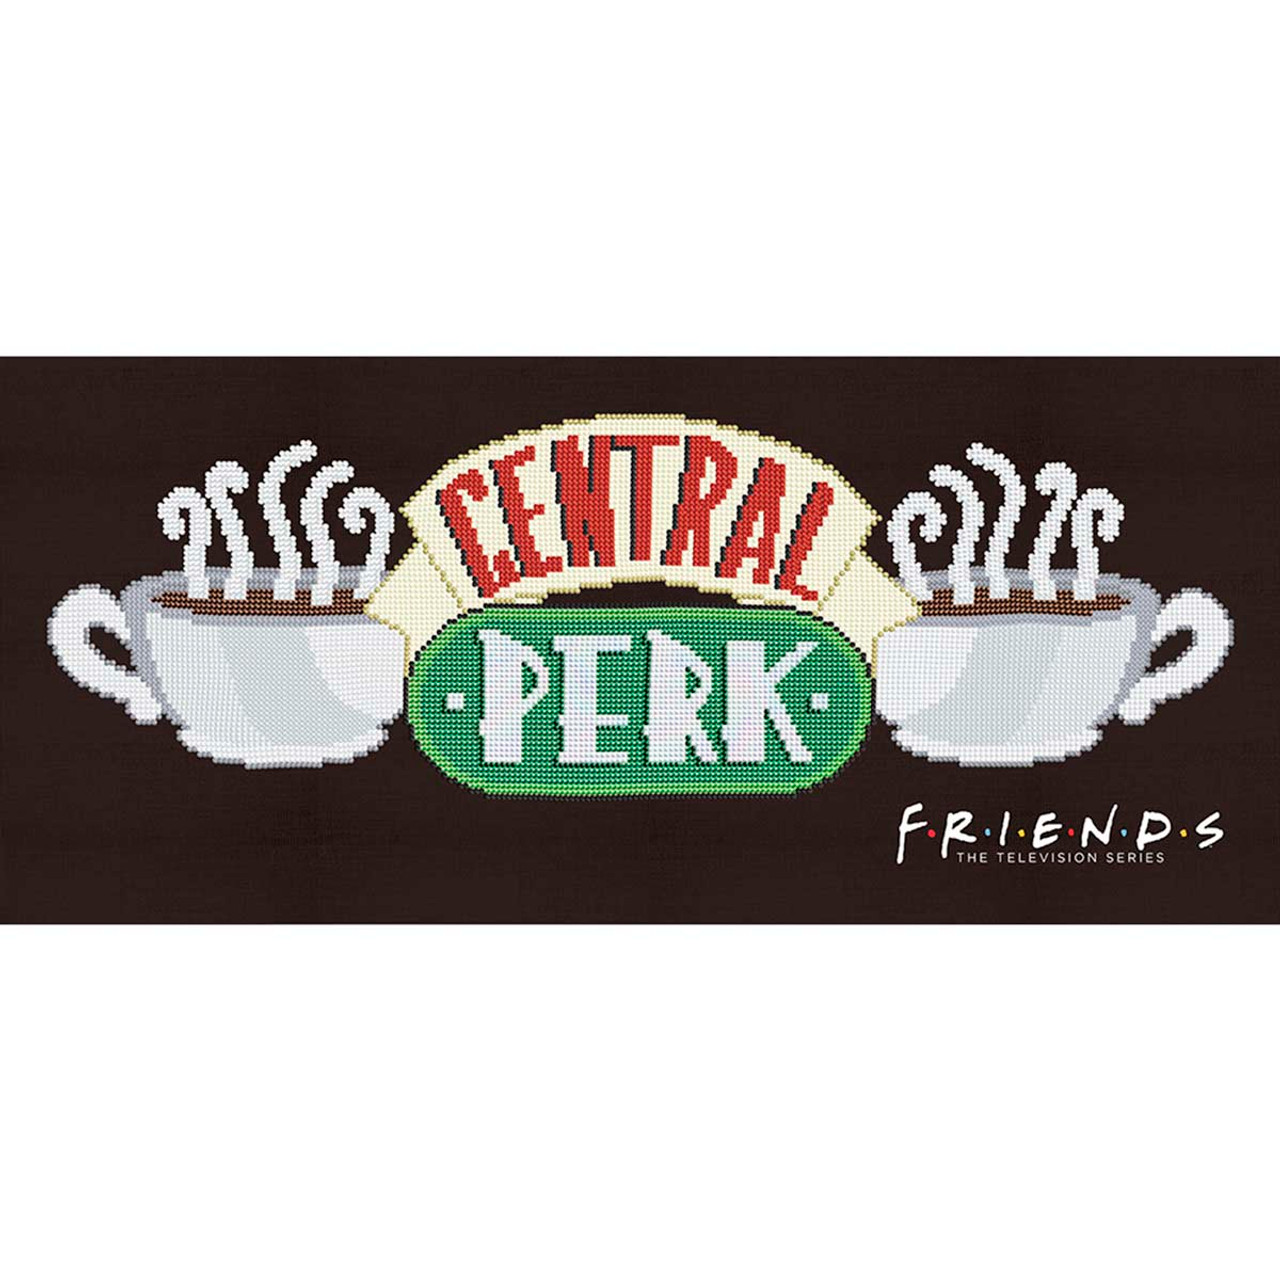 Central Perk, Central Perk Set, Friends Photo Mural, Friends TV